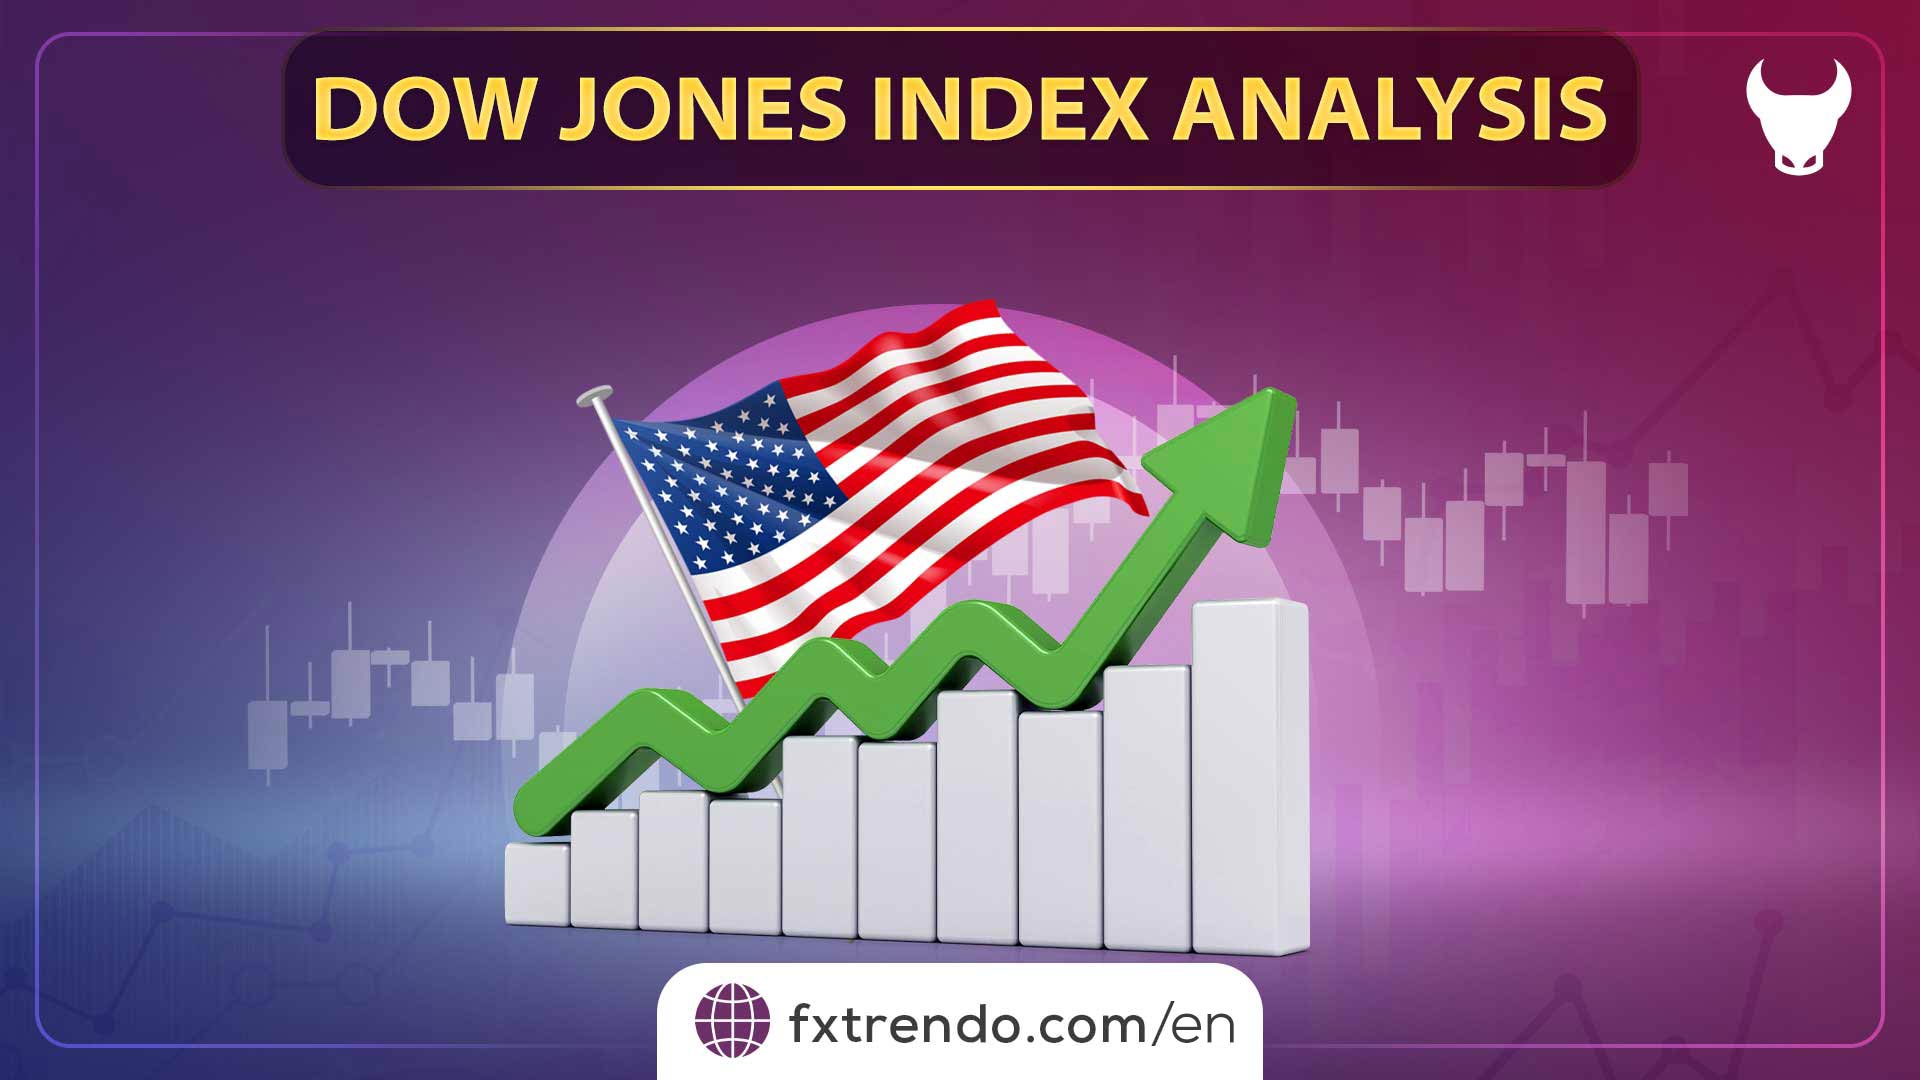 Dow Jones Index analysis